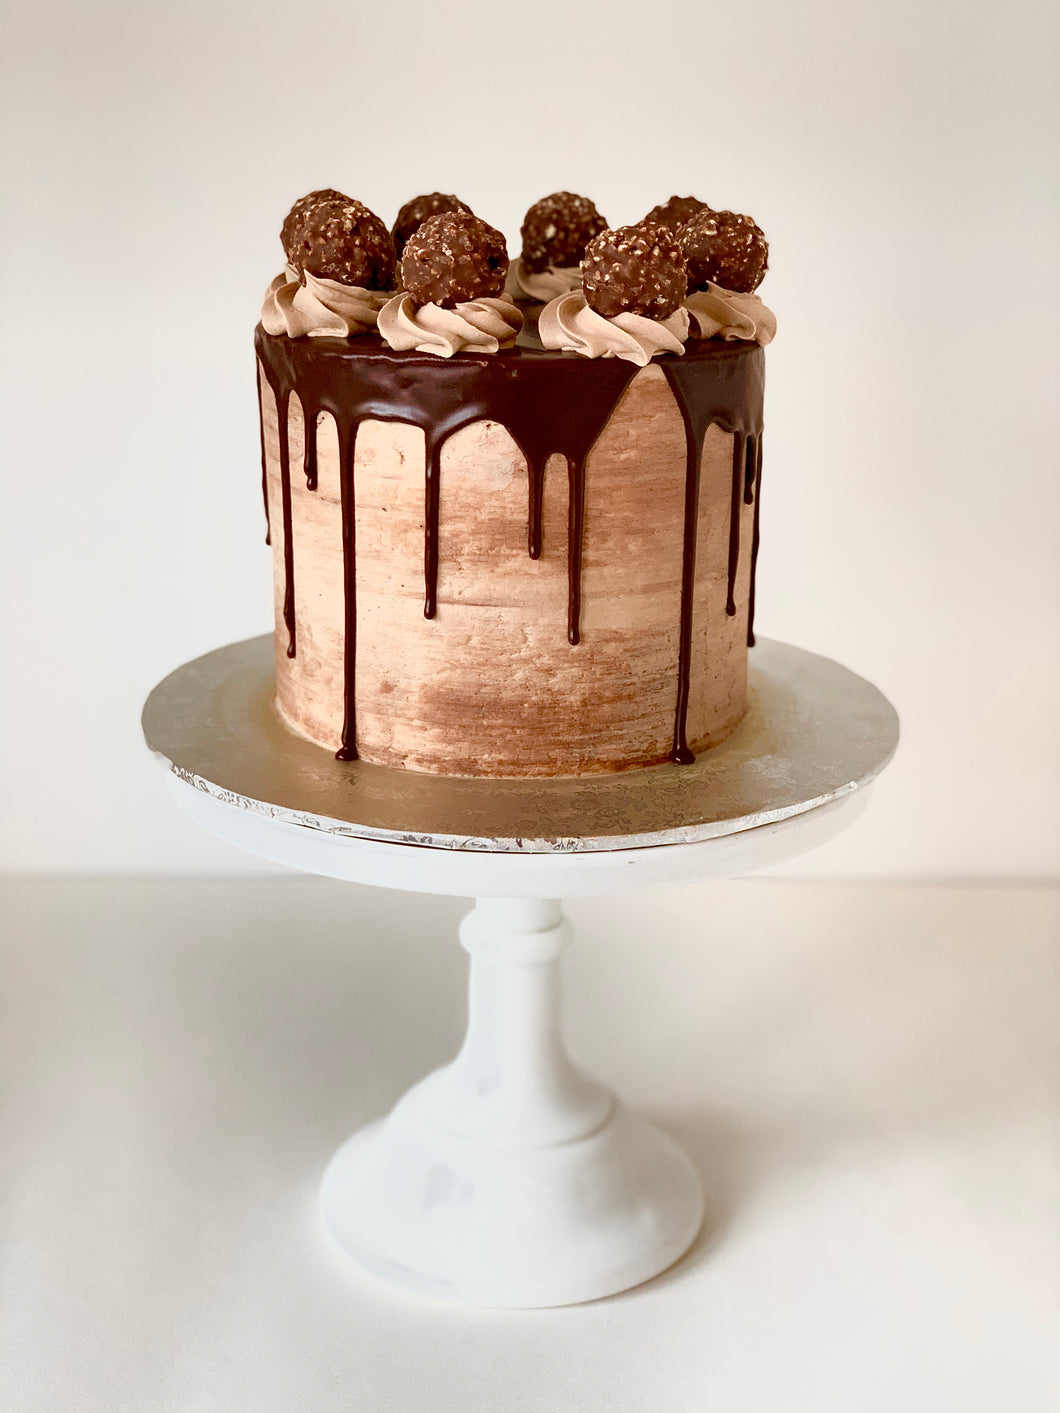 Roche Chocolate Cake